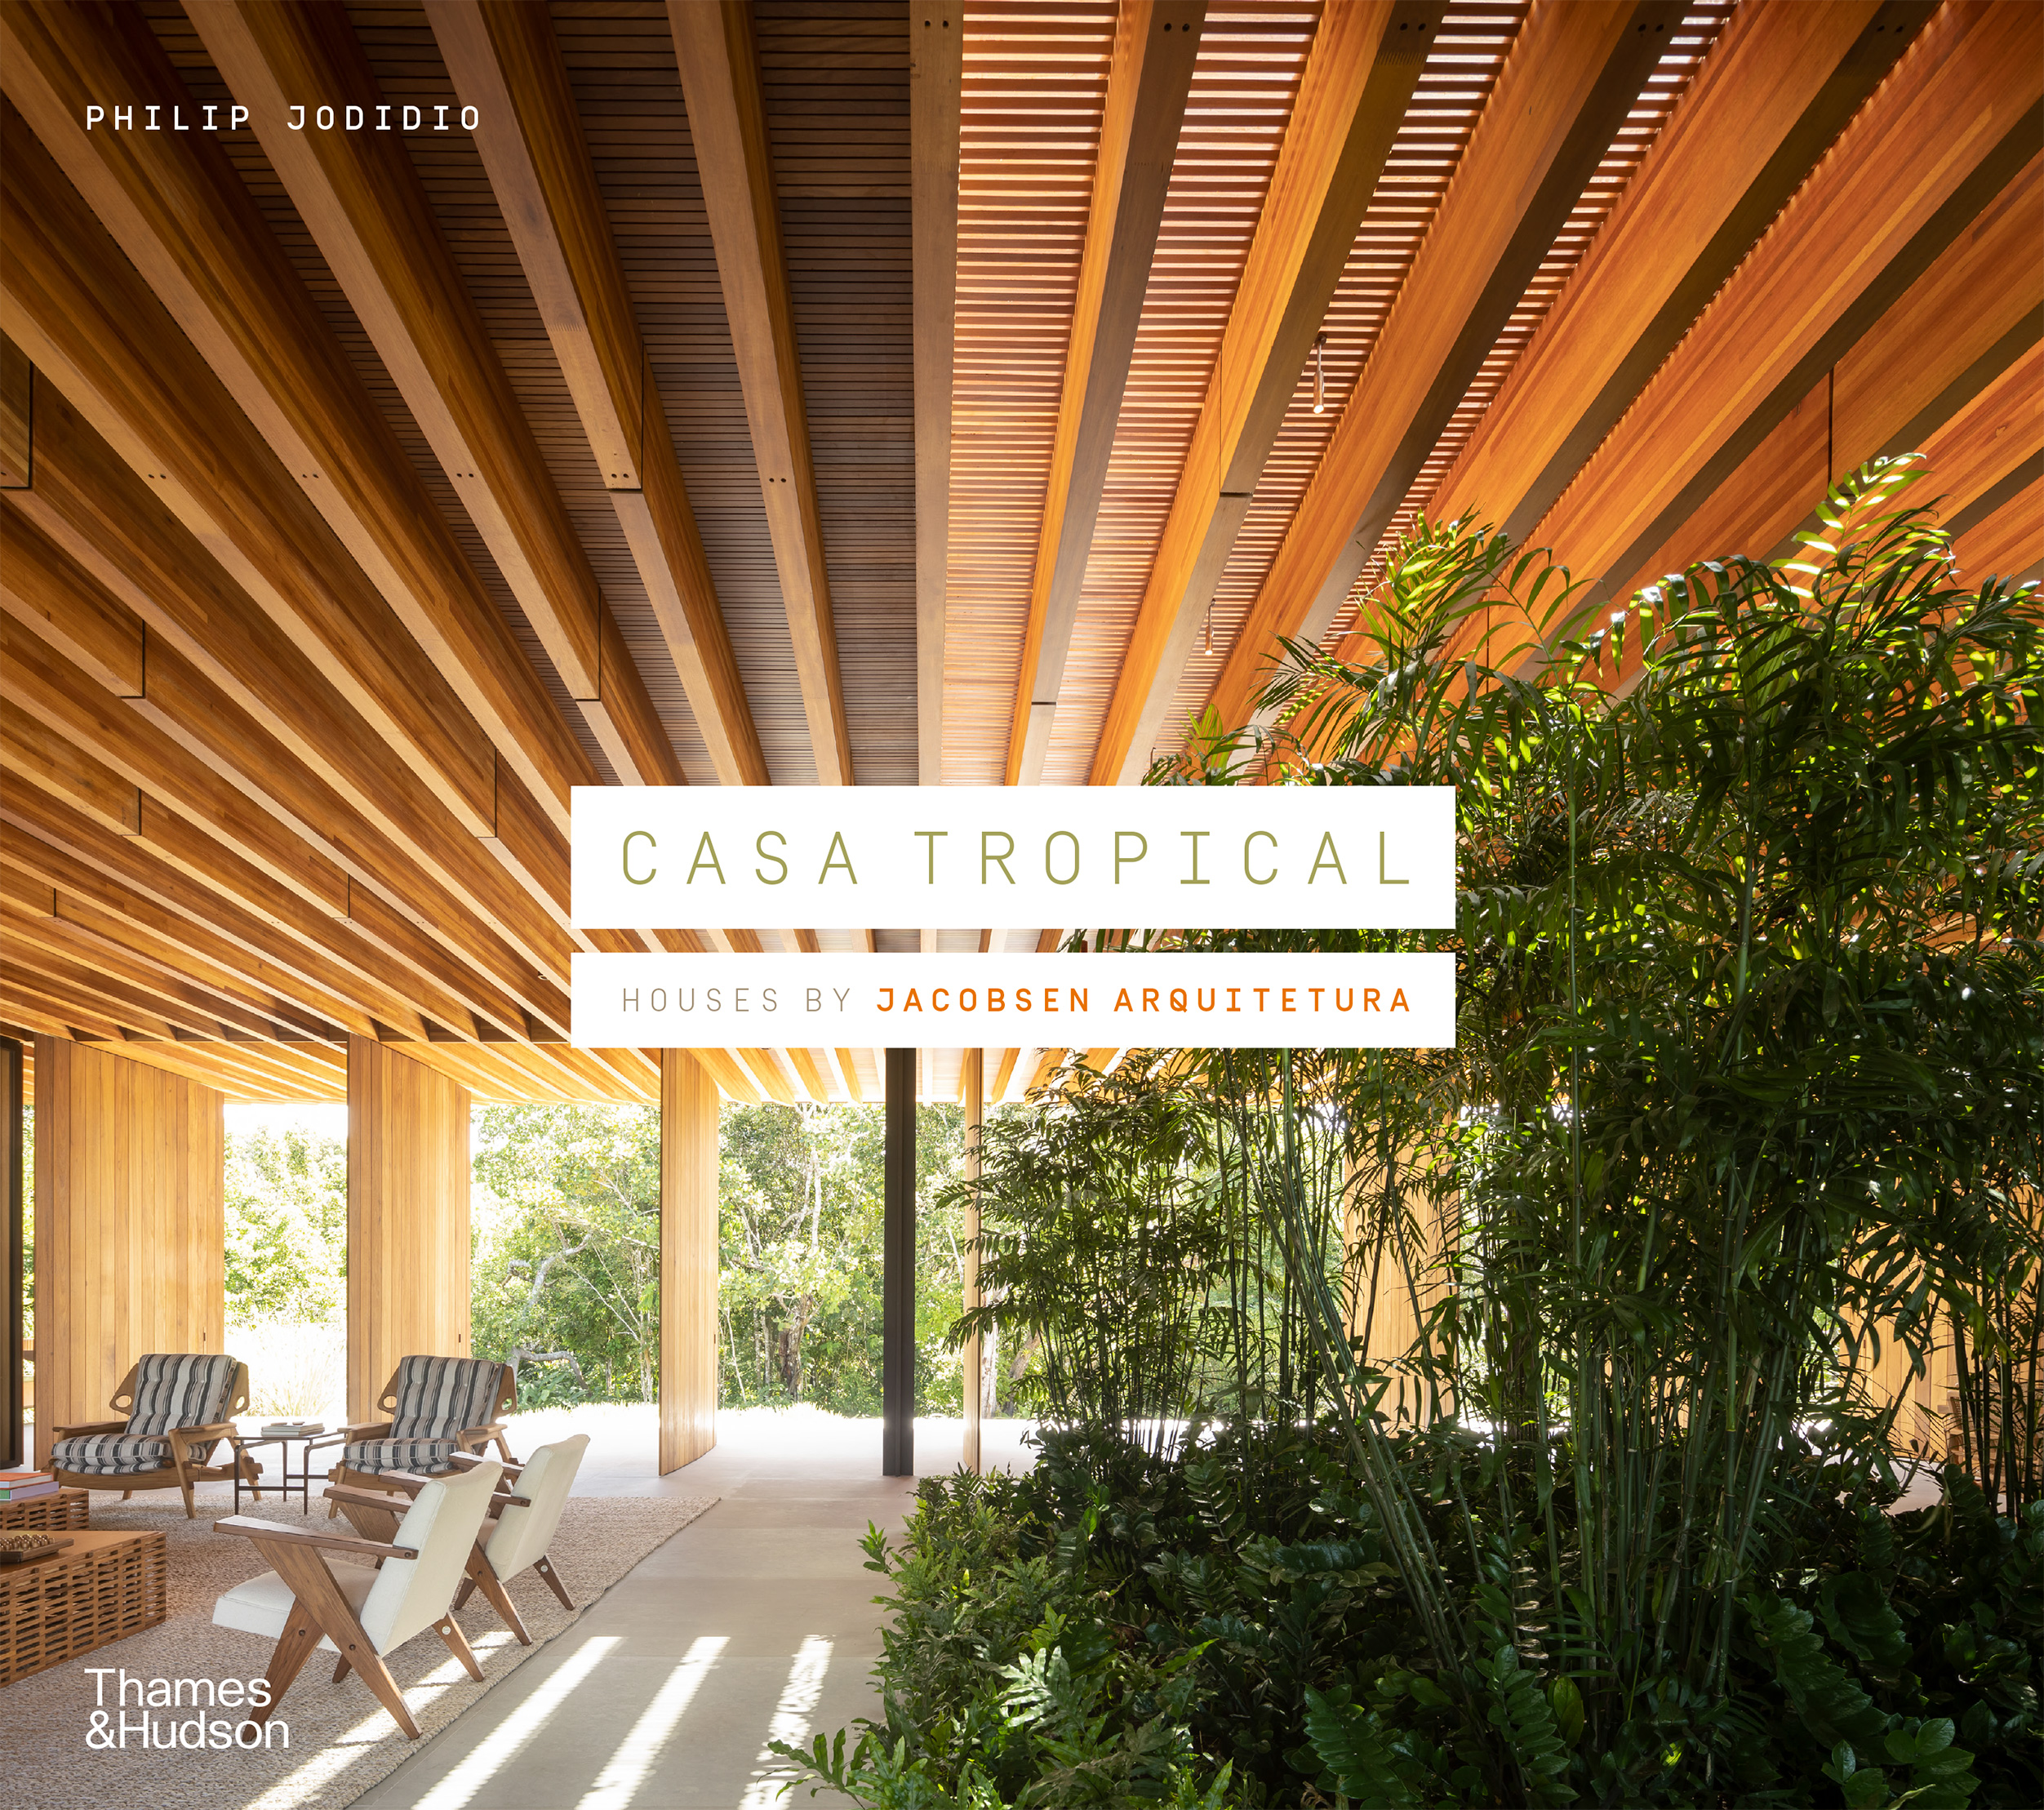 Casa Tropical – Houses by Jacobsen Arquitetura